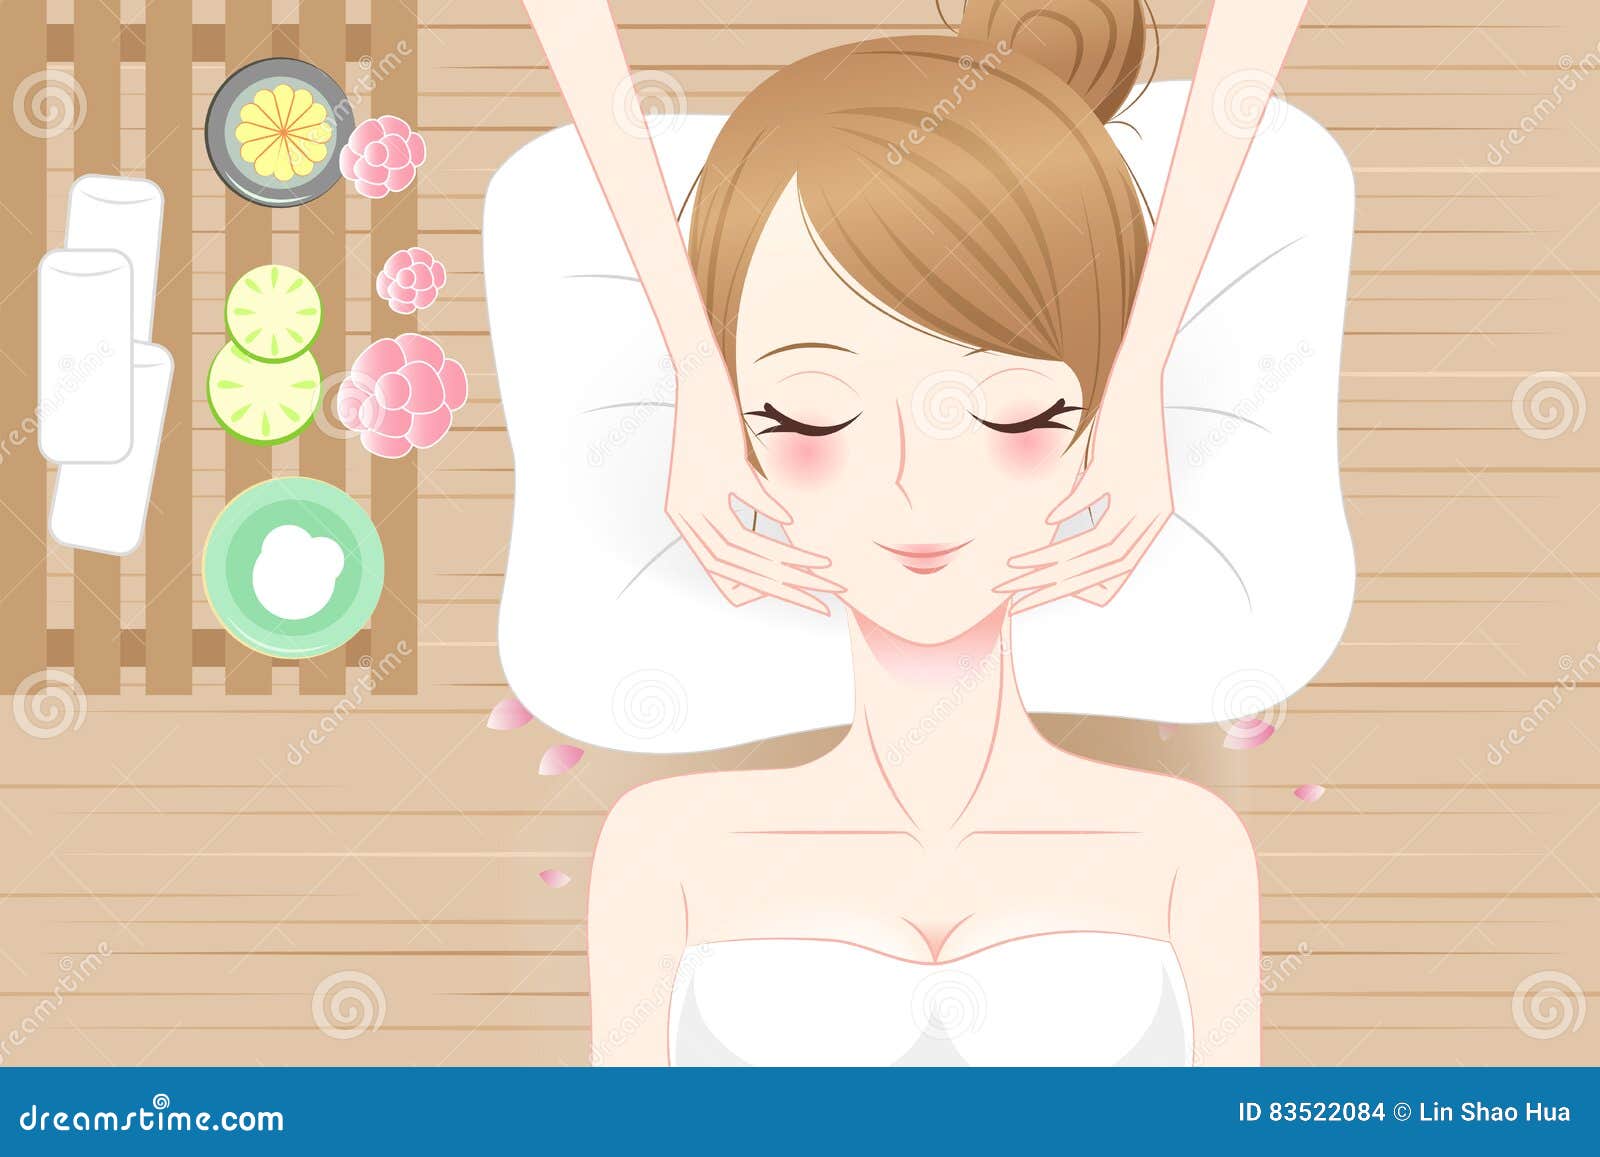 Cartoon woman enjoy do spa stock vector. Illustration of face - 83522084